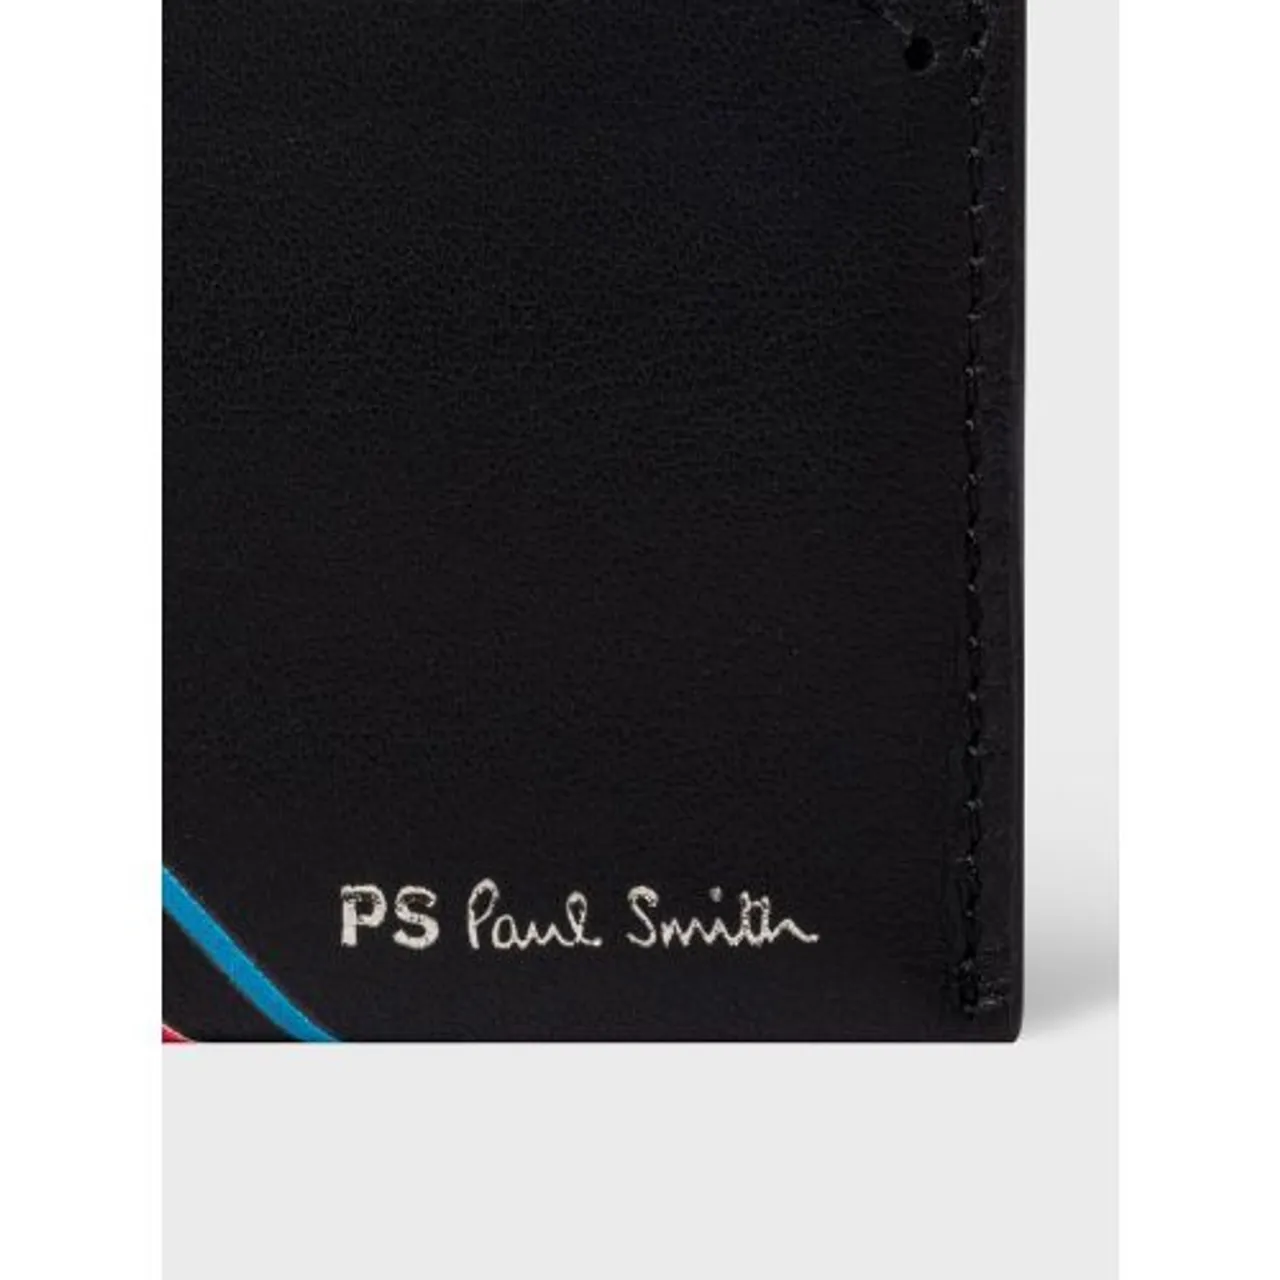 Paul Smith Mens Black Credit Card Holder Wallet